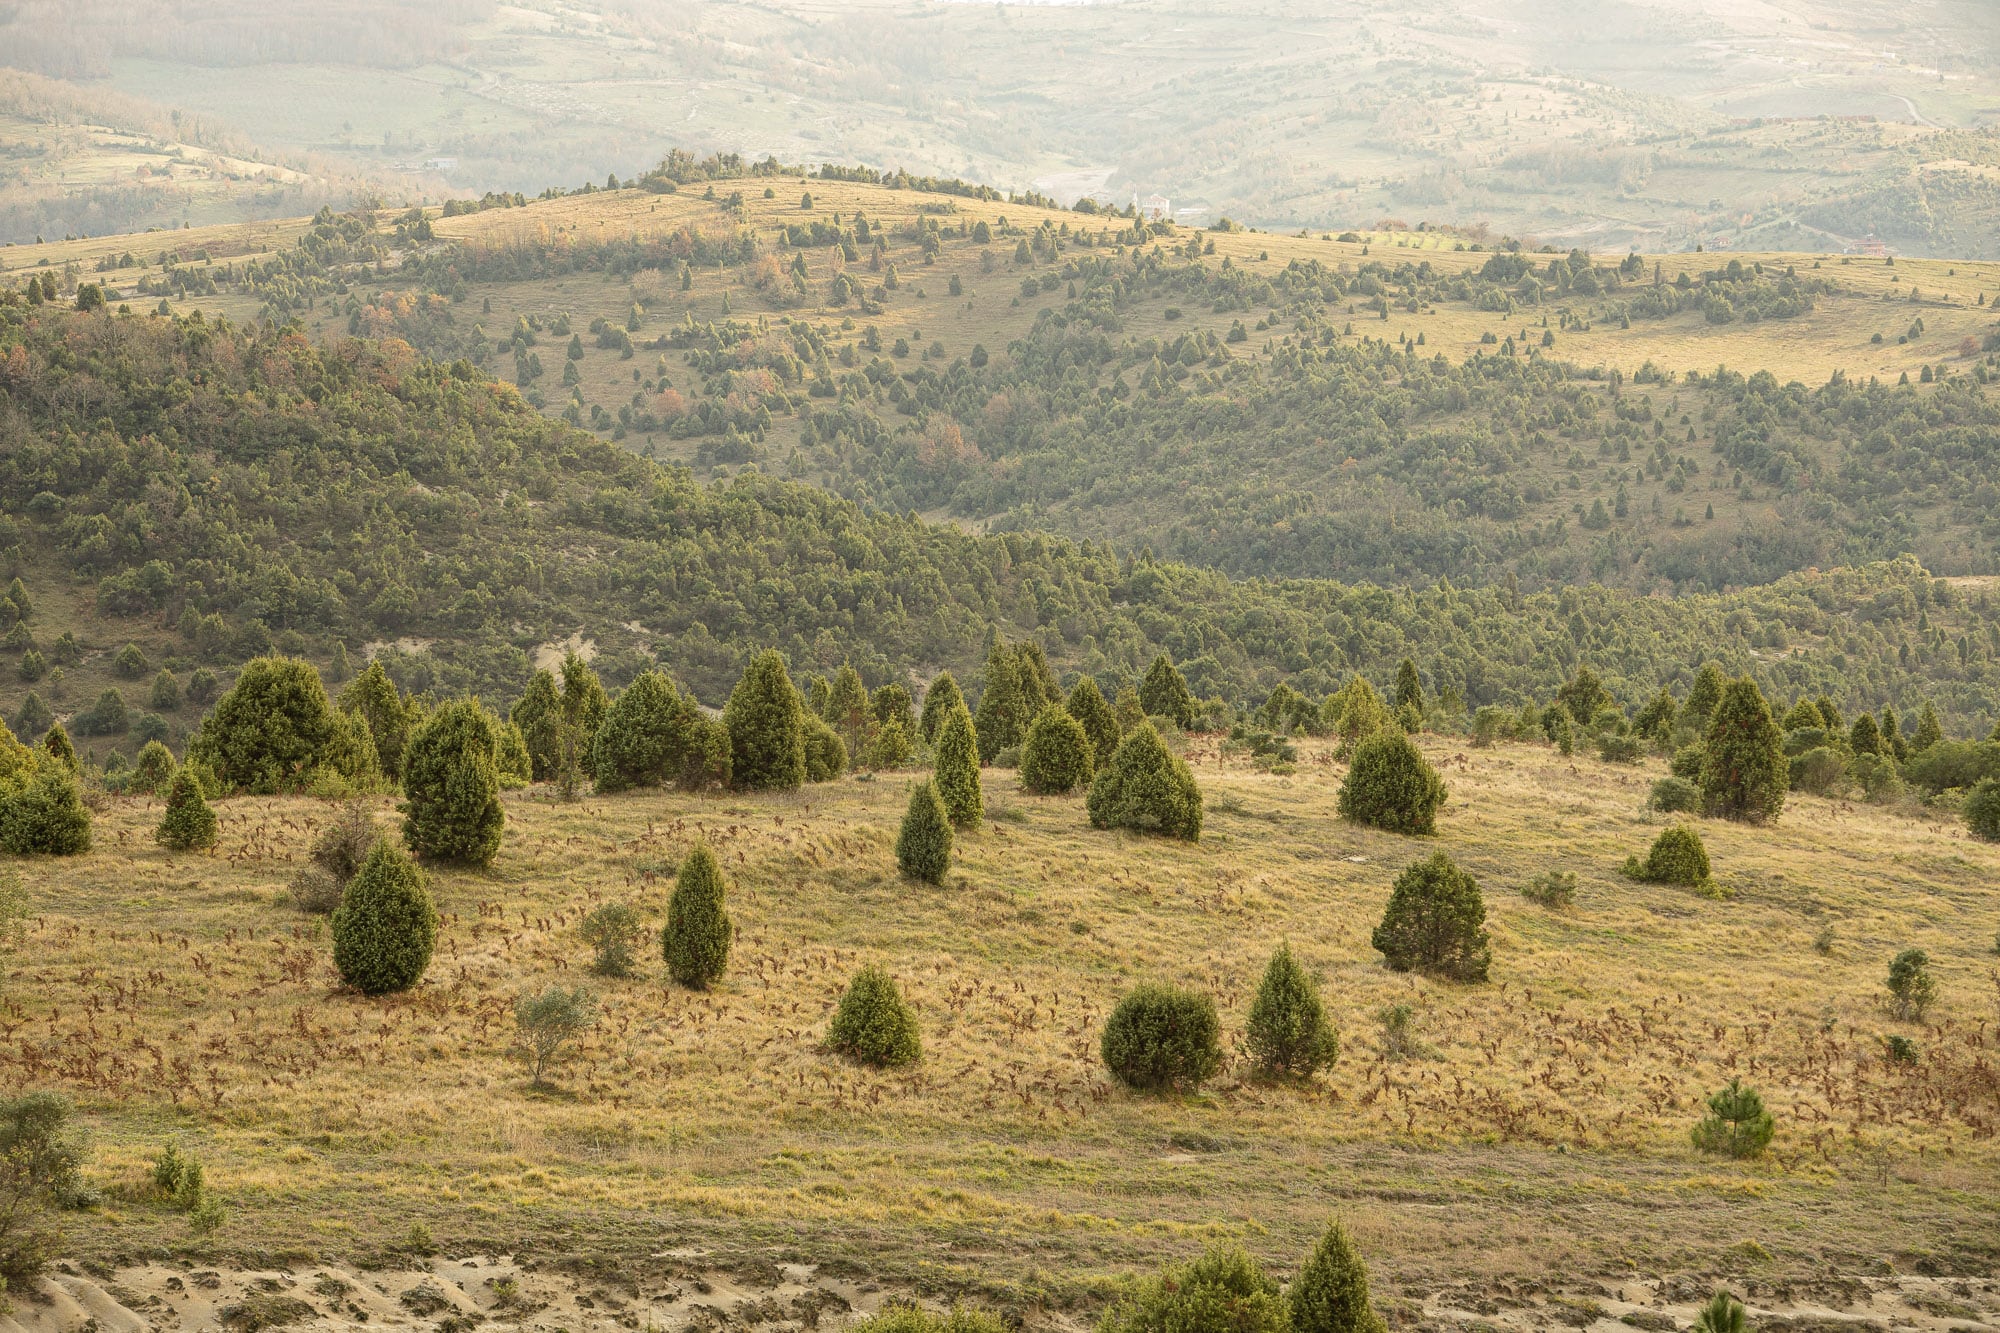 Mediterranean-looking landscape near Agva